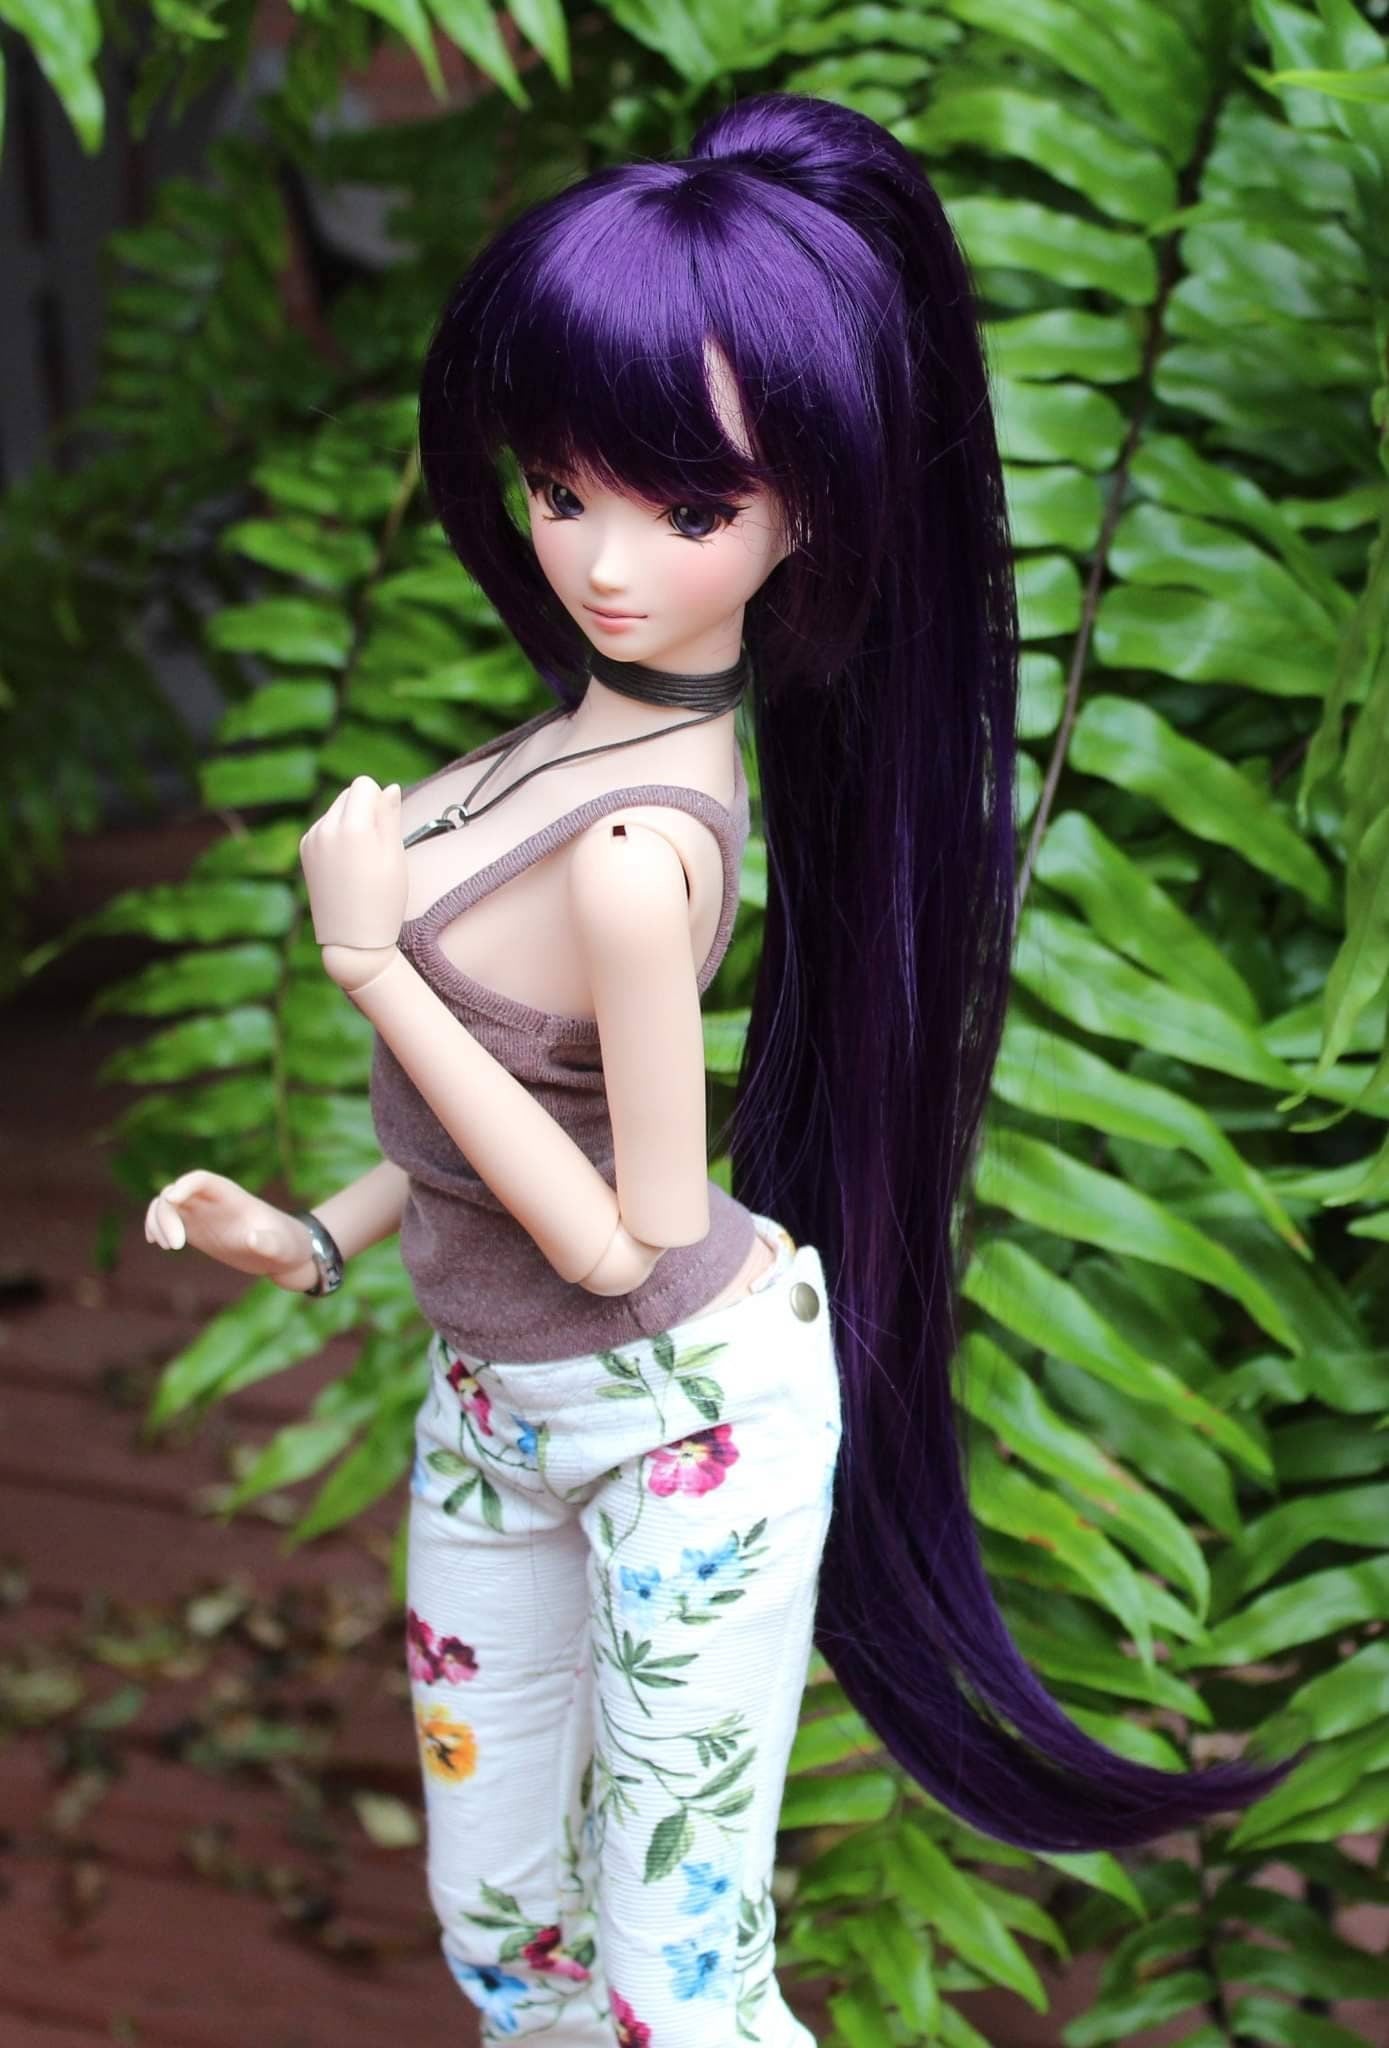 Custom doll WIG for Smart Dolls- Heat Safe - Tangle Resistant- 8.5" head size of Bjd, SD, Dollfie Dream dolls Purple Tan Cap  anime Limited